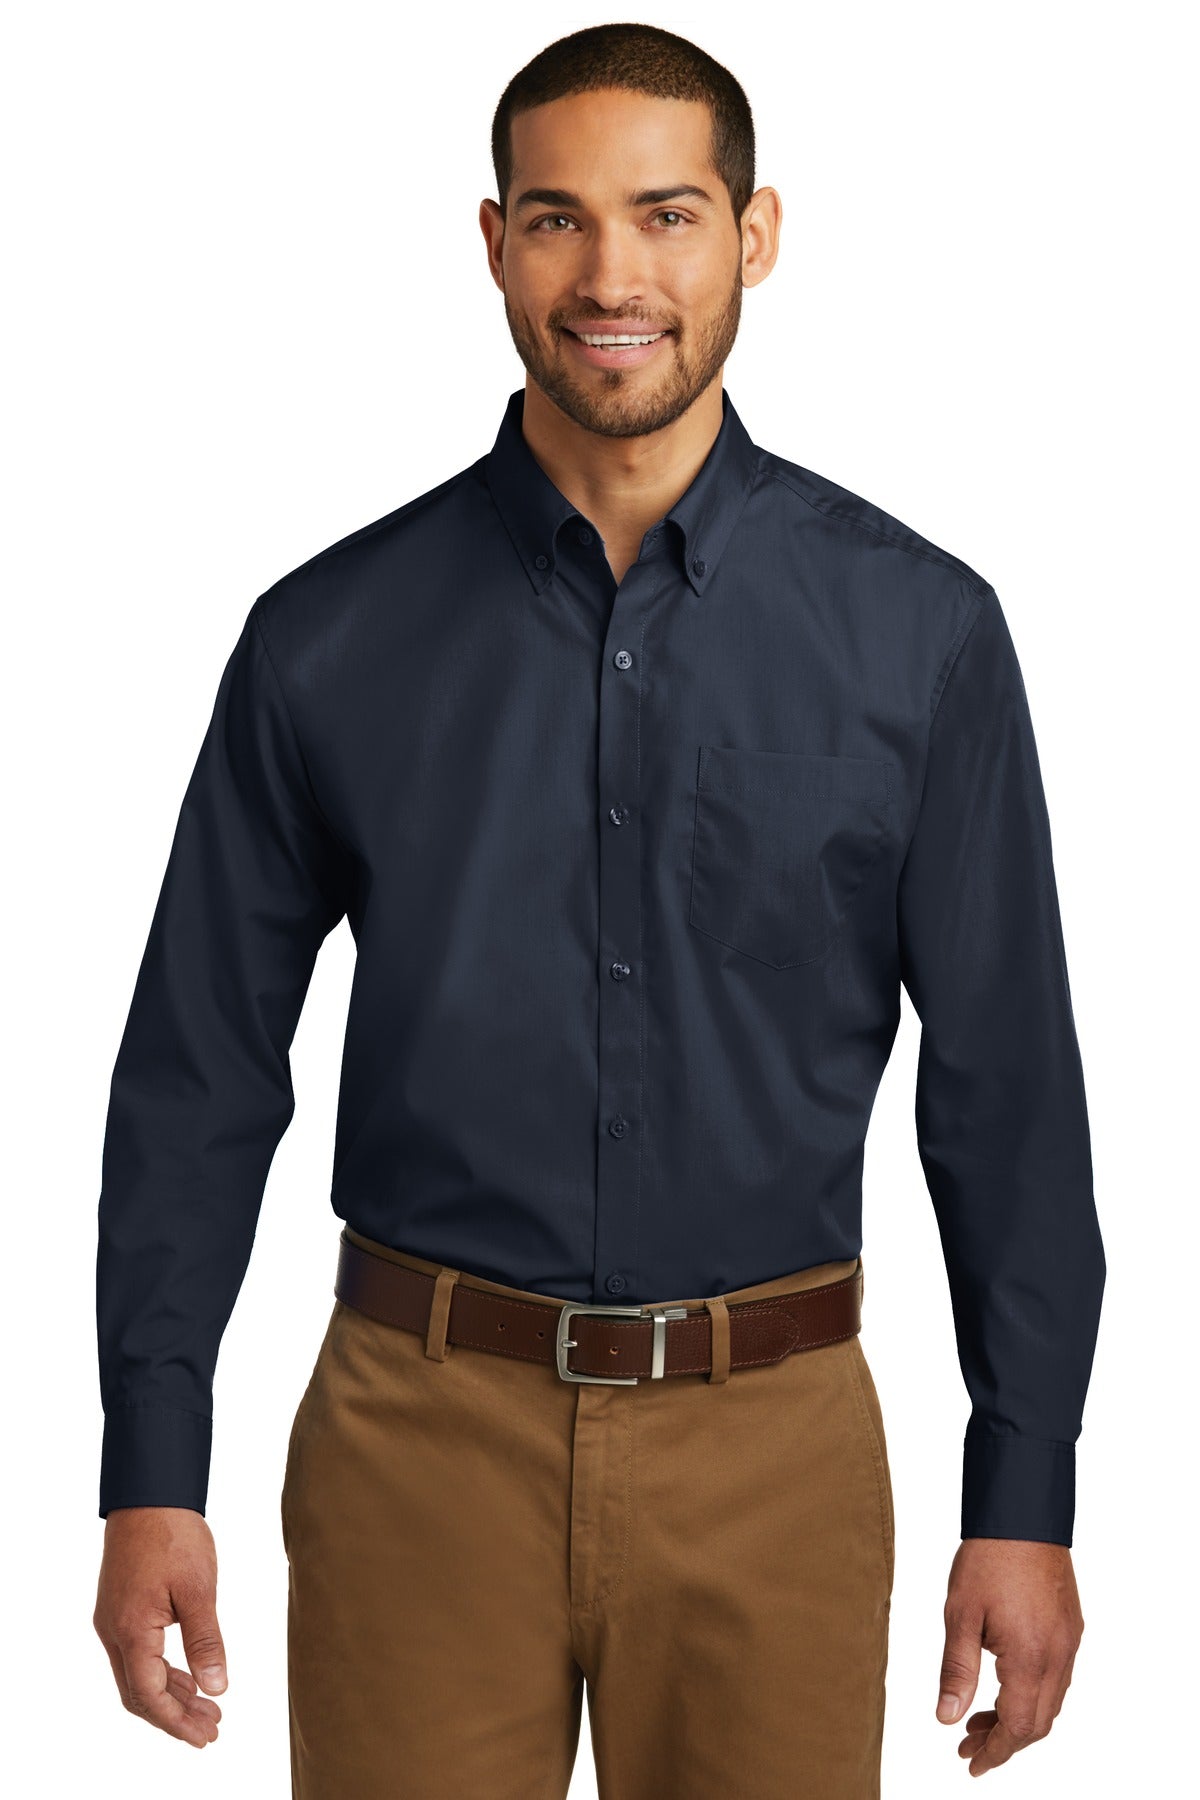 Port Authority® Long Sleeve Carefree Poplin Shirt. W100 [River Blue Navy] - DFW Impression